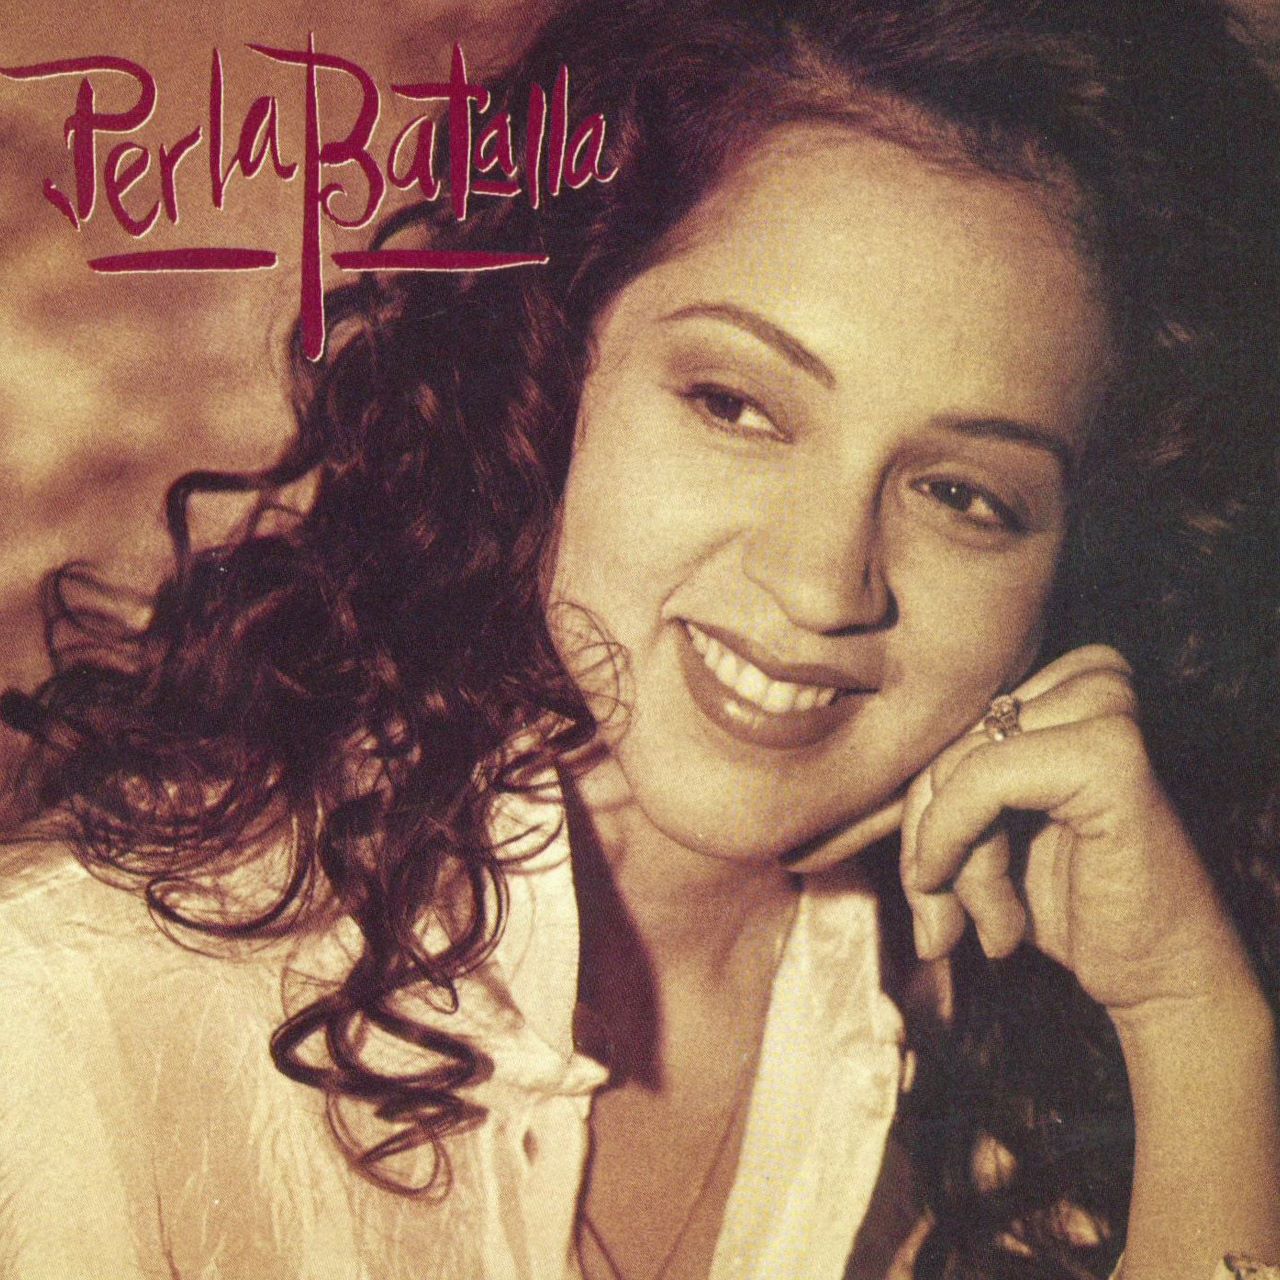 Perla Batalla – Perla Batalla cover album